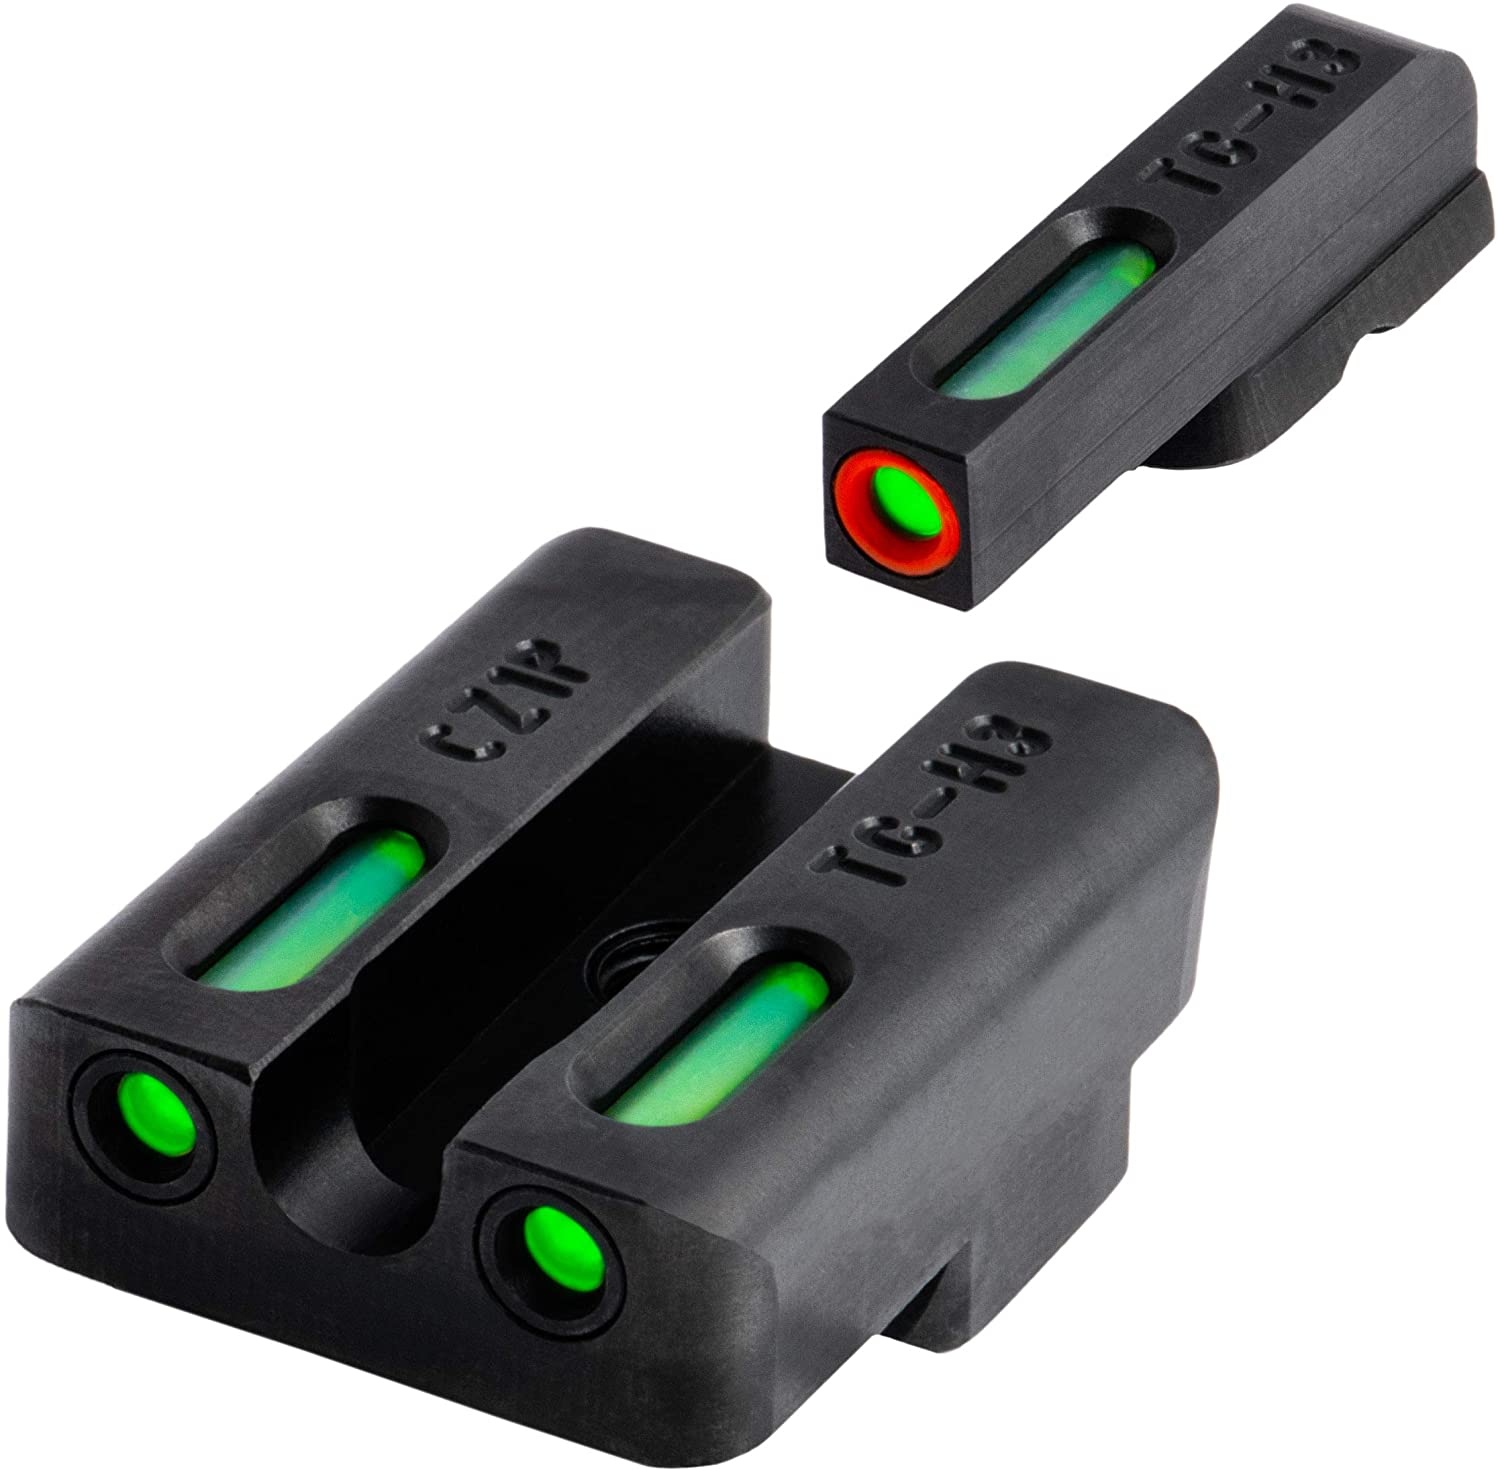 TRUGLO - TFX Pro Tritium and Fiber Optic Xtreme Handgun Sights for CZ Pistols, Black